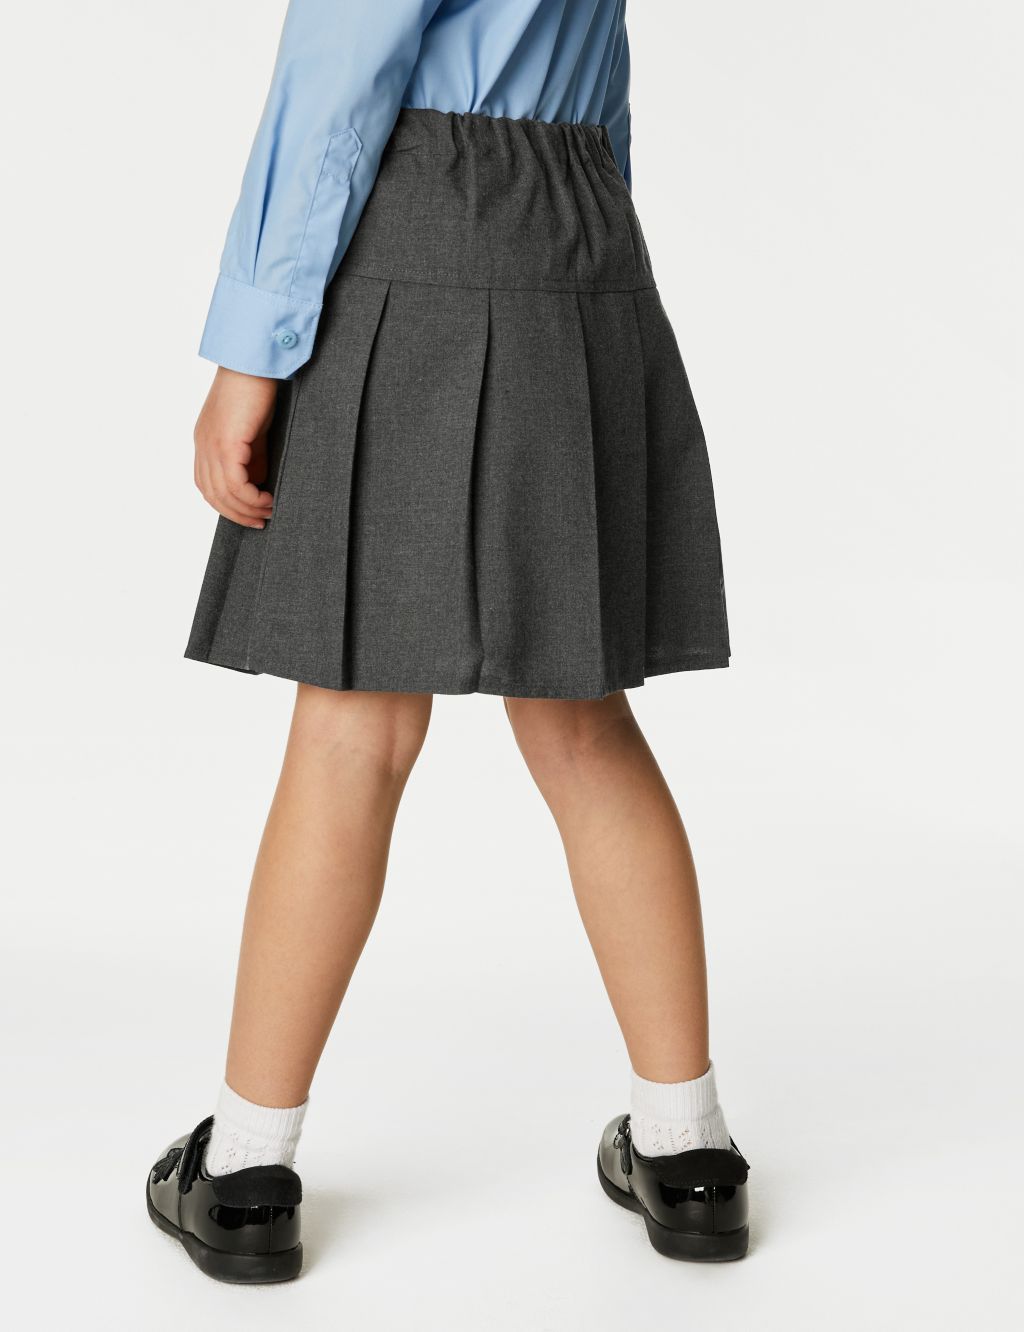 2pk Girls' Crease Resistant School Skirts (2-16 Yrs) image 4